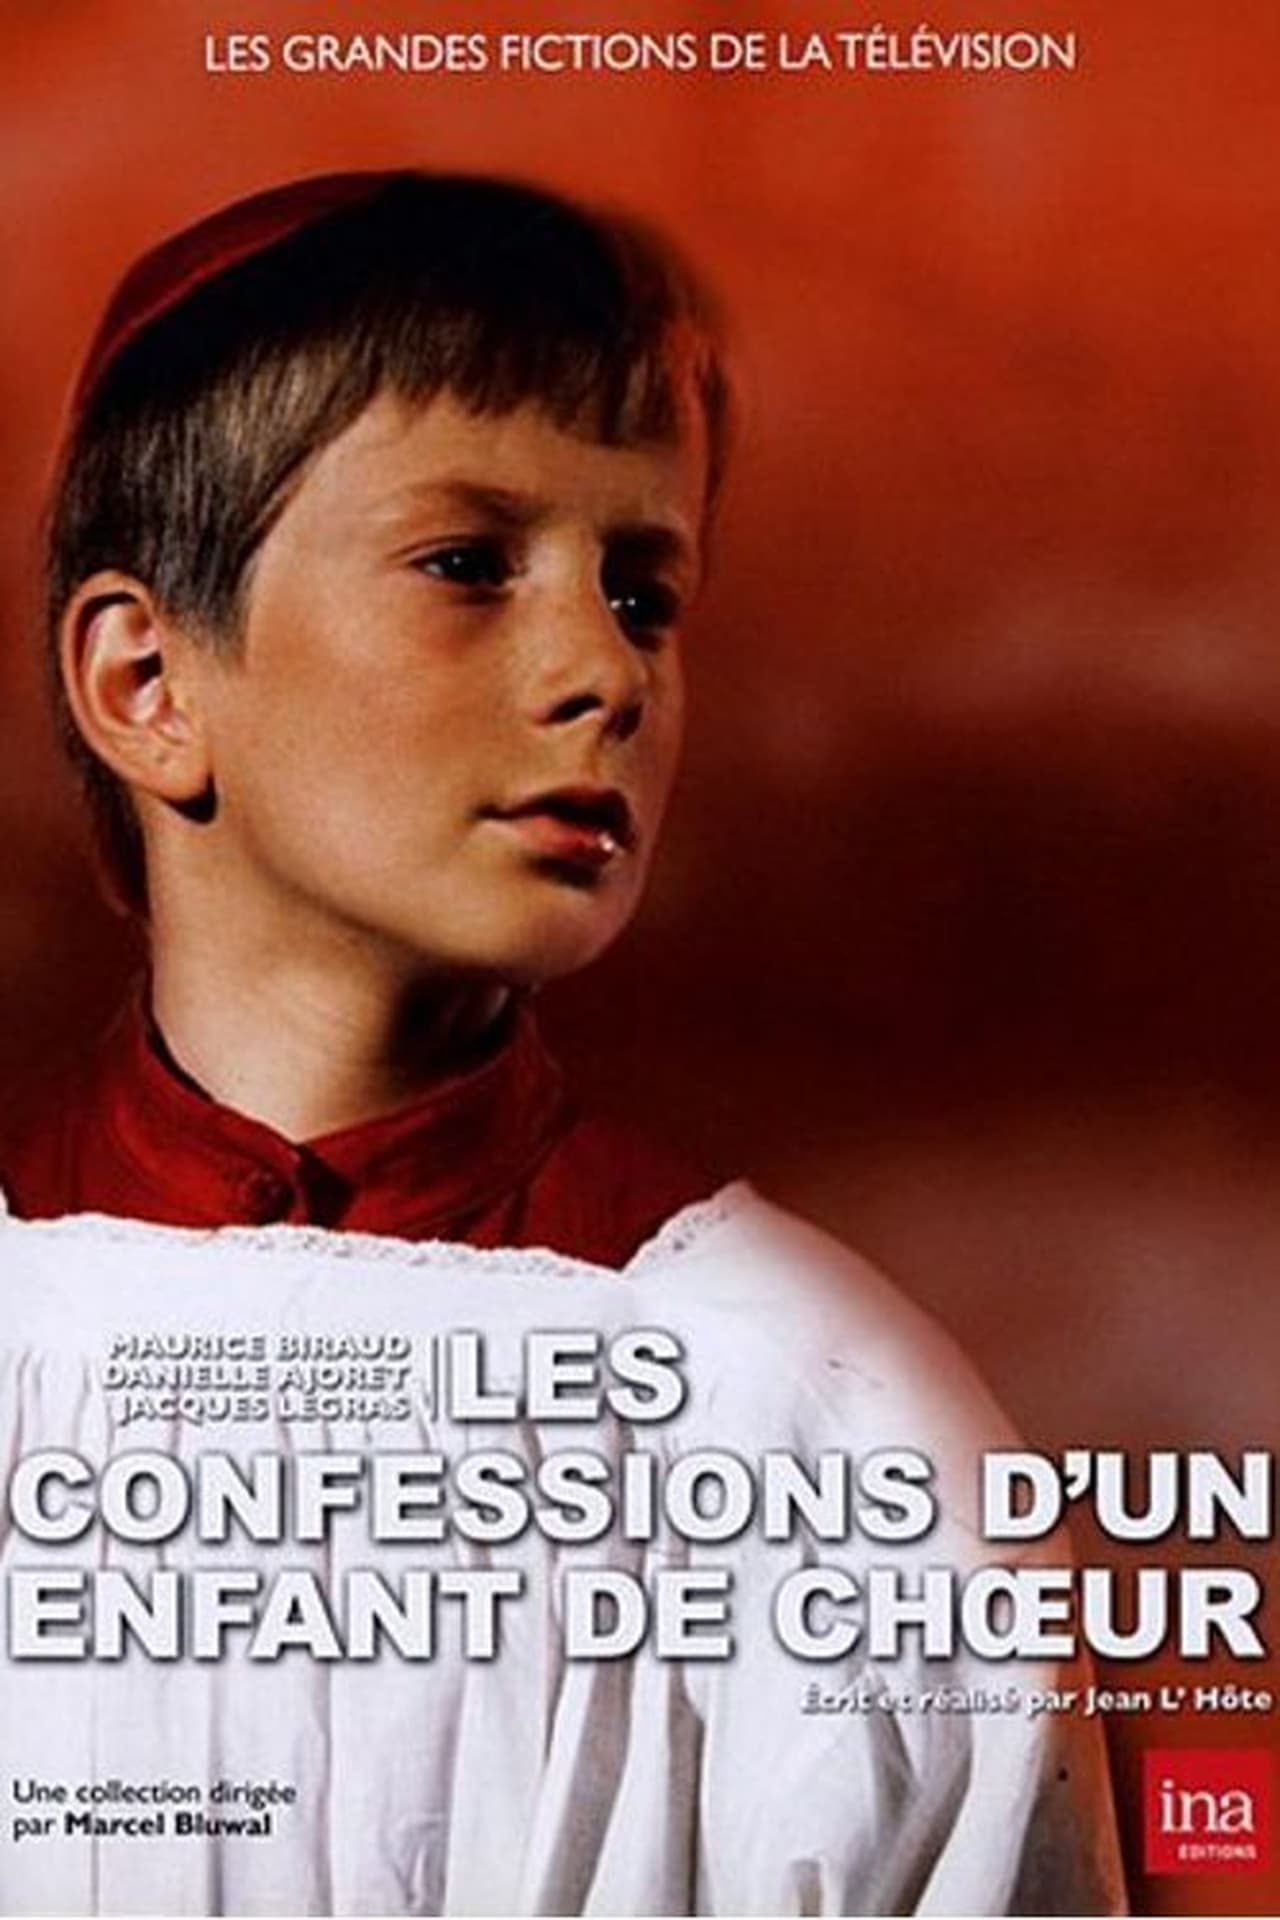 Les Confessions d'un enfant de choeur (1977) Screenshot 1